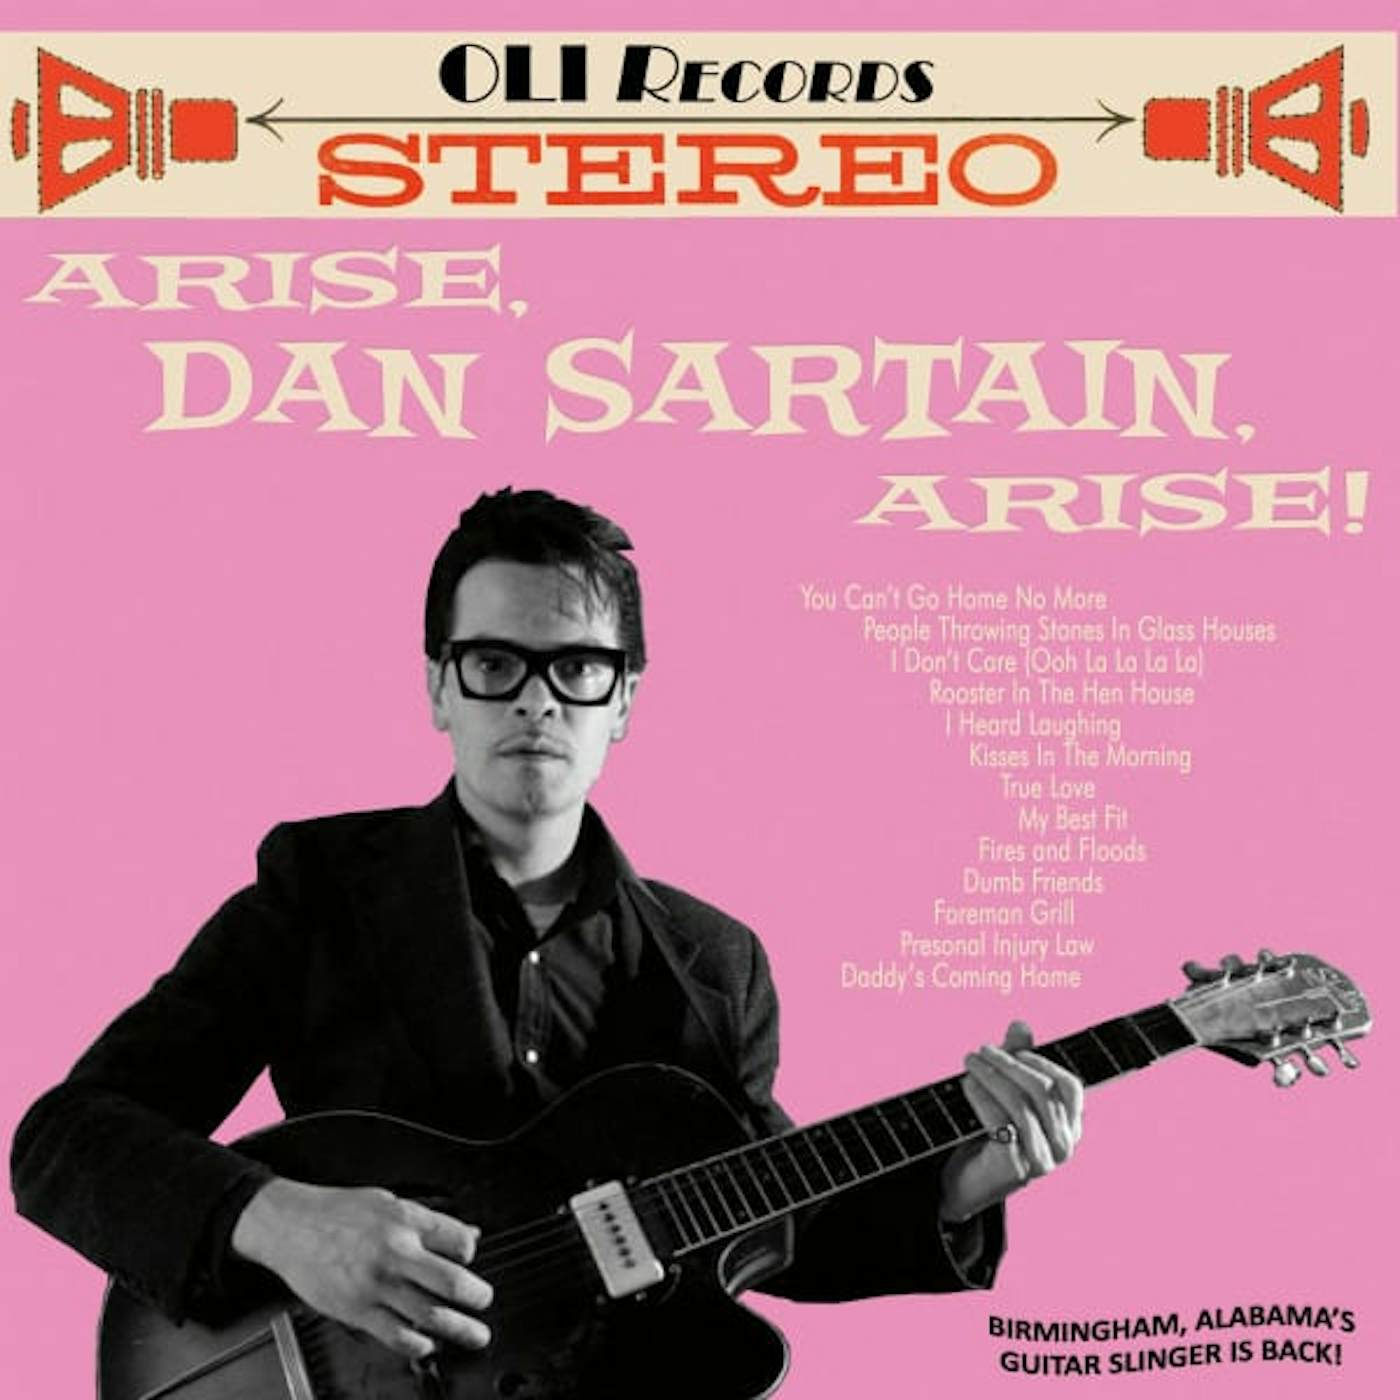 Arise, Dan Sartain, Arise Vinyl Record